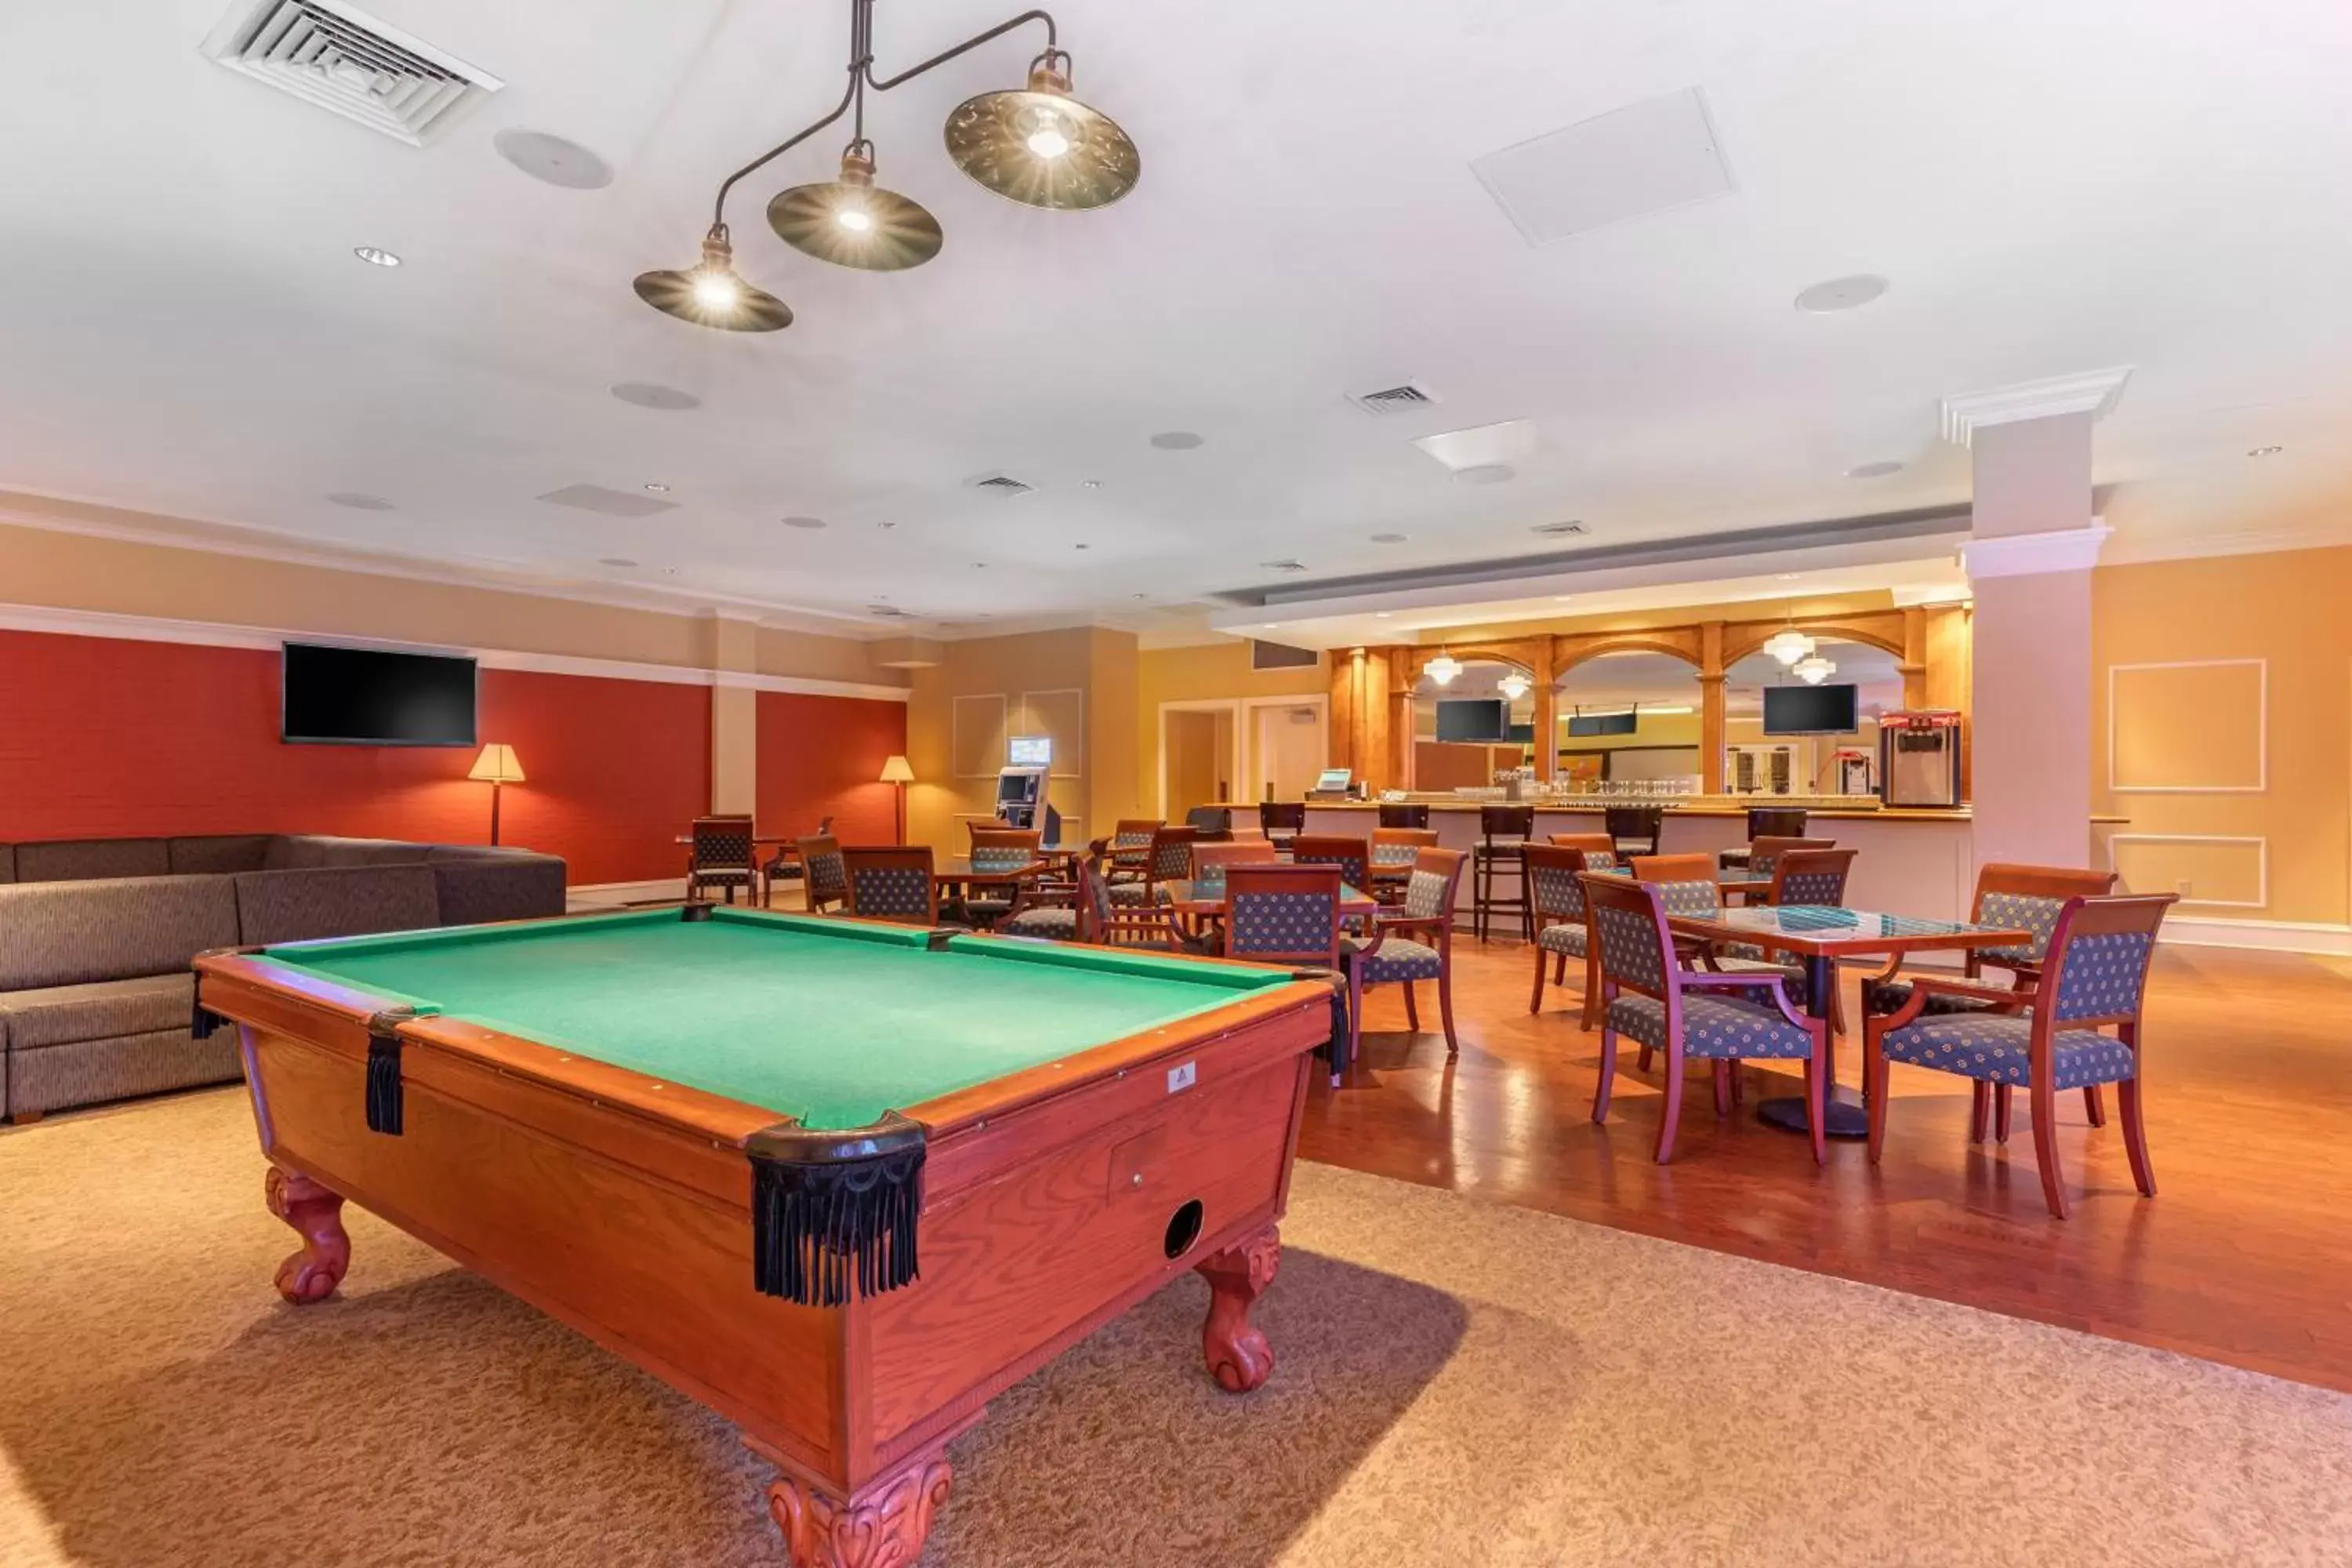 Game Room, Billiards in The Omni Homestead Resort